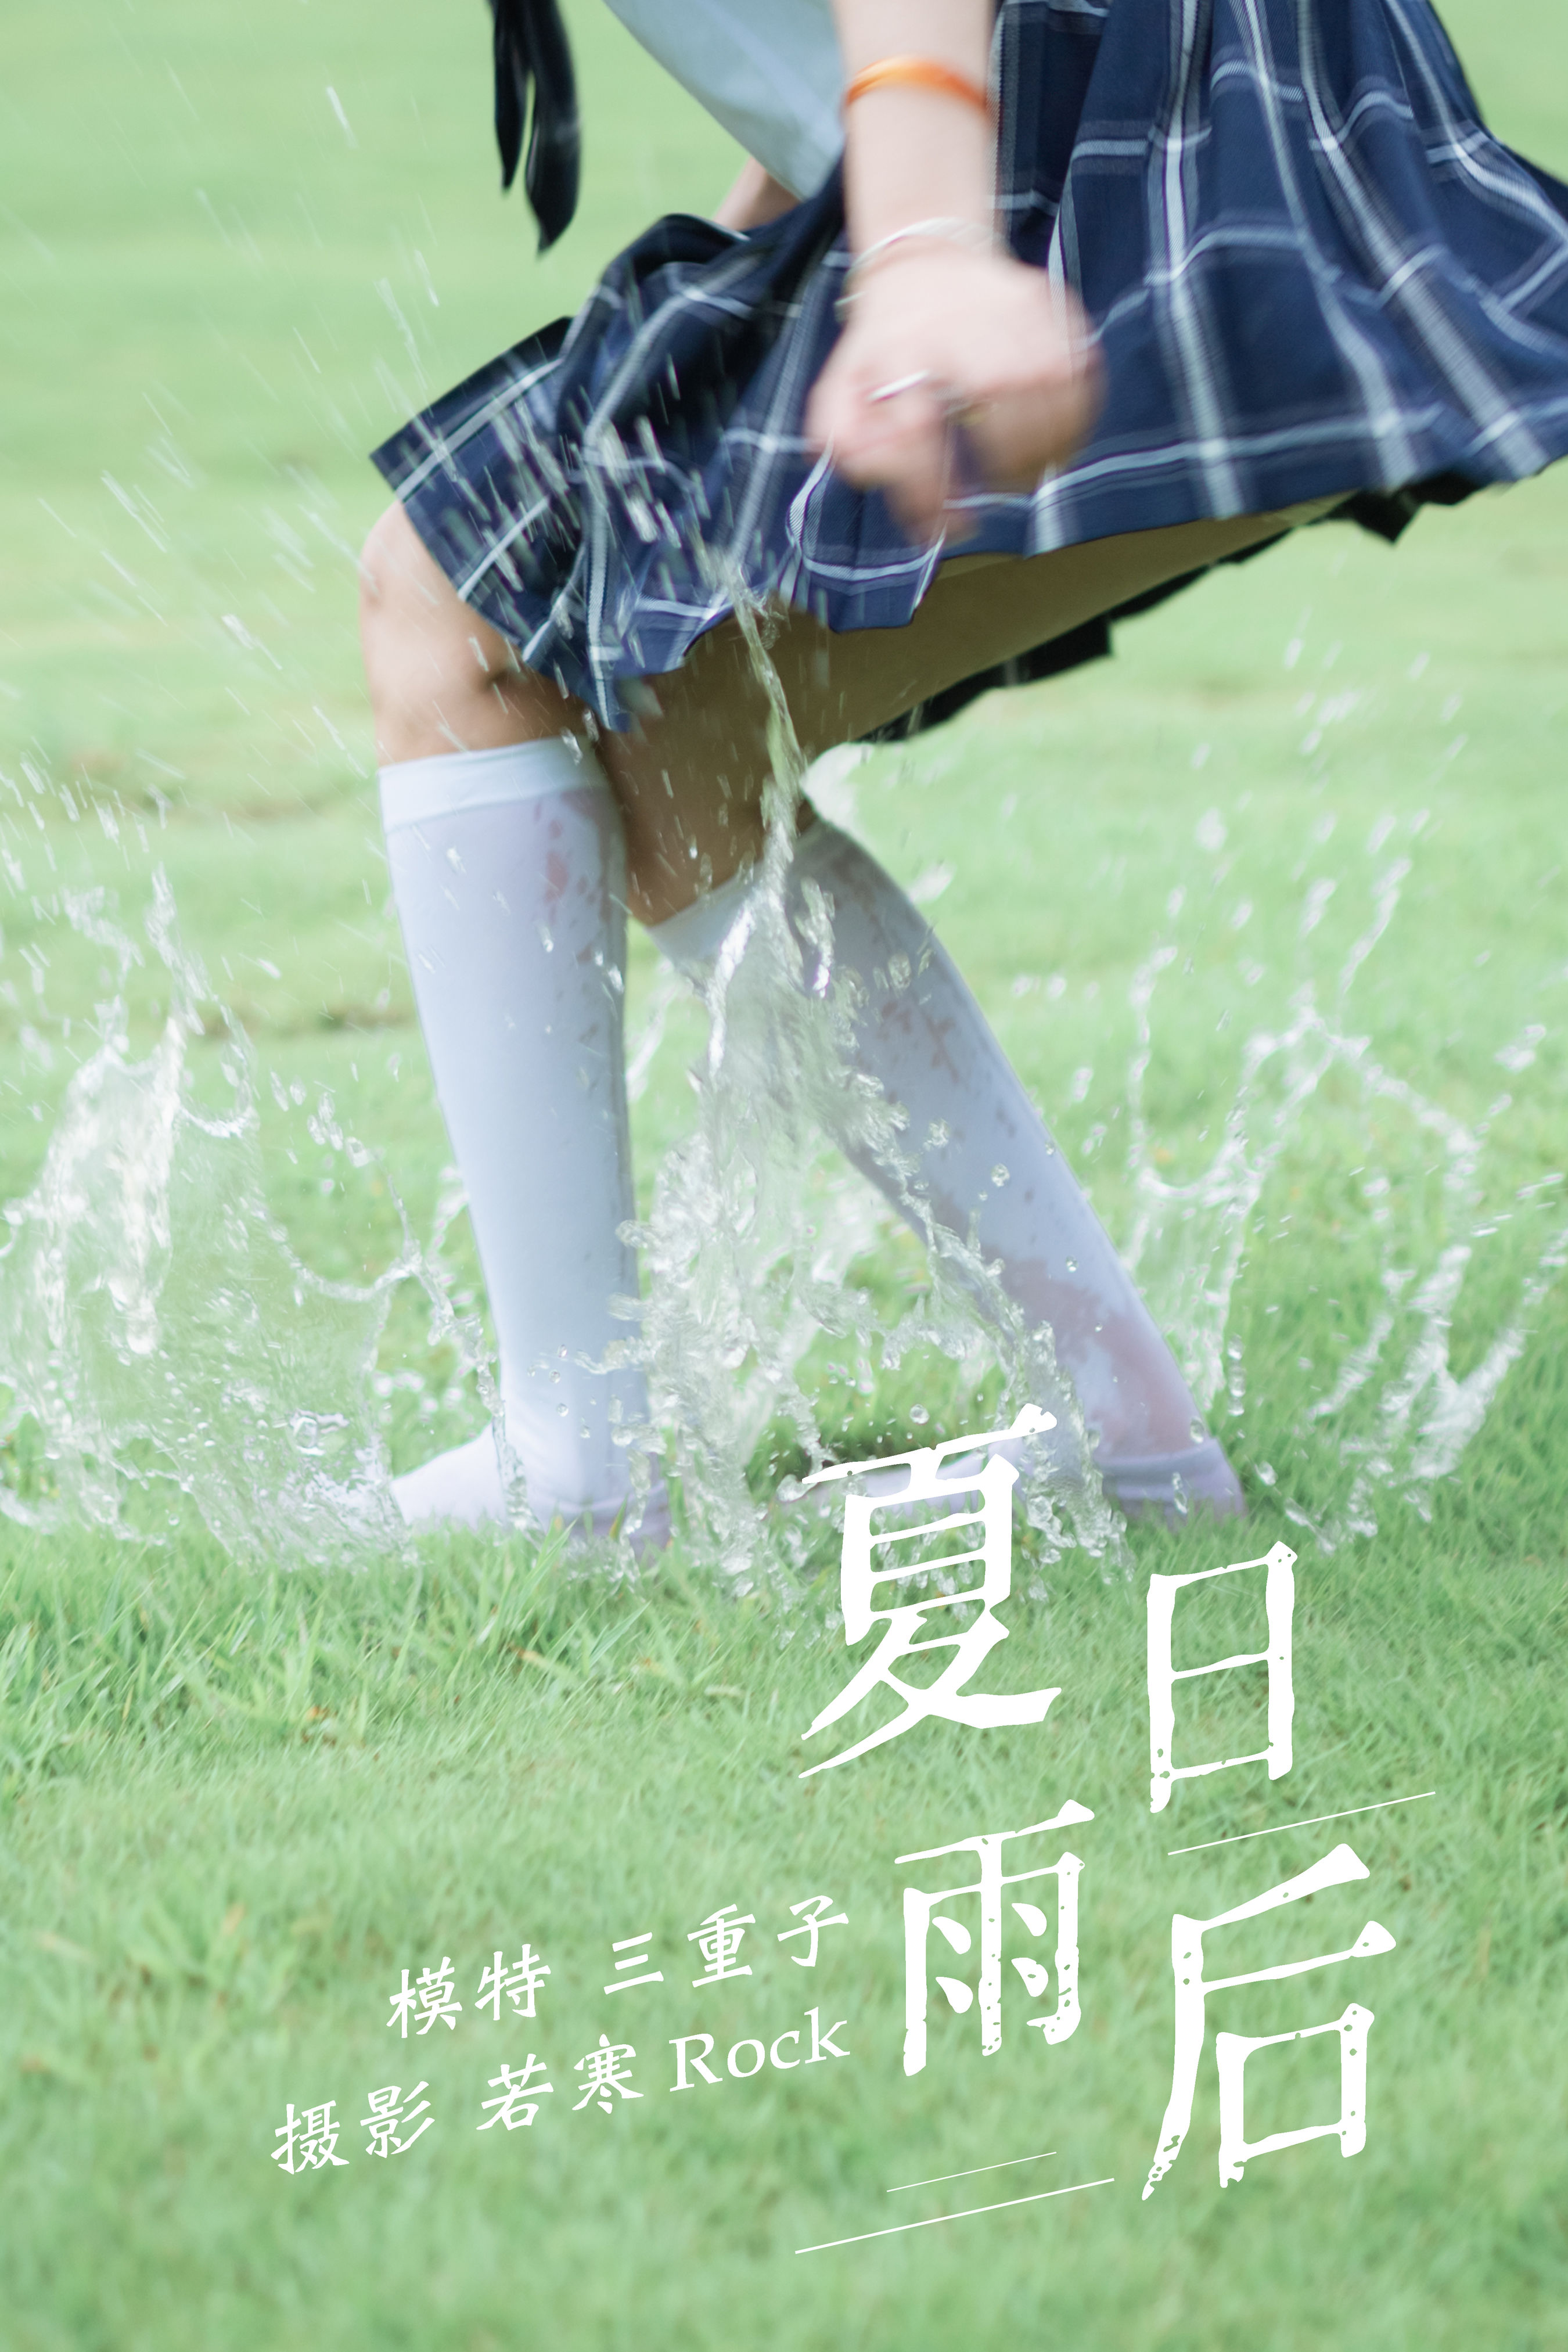 [YiTuYu艺图语] 三重子-kiki《夏日雨后》 好看的4K高清无水印纯欲妹子意境唯美写真完整版图集